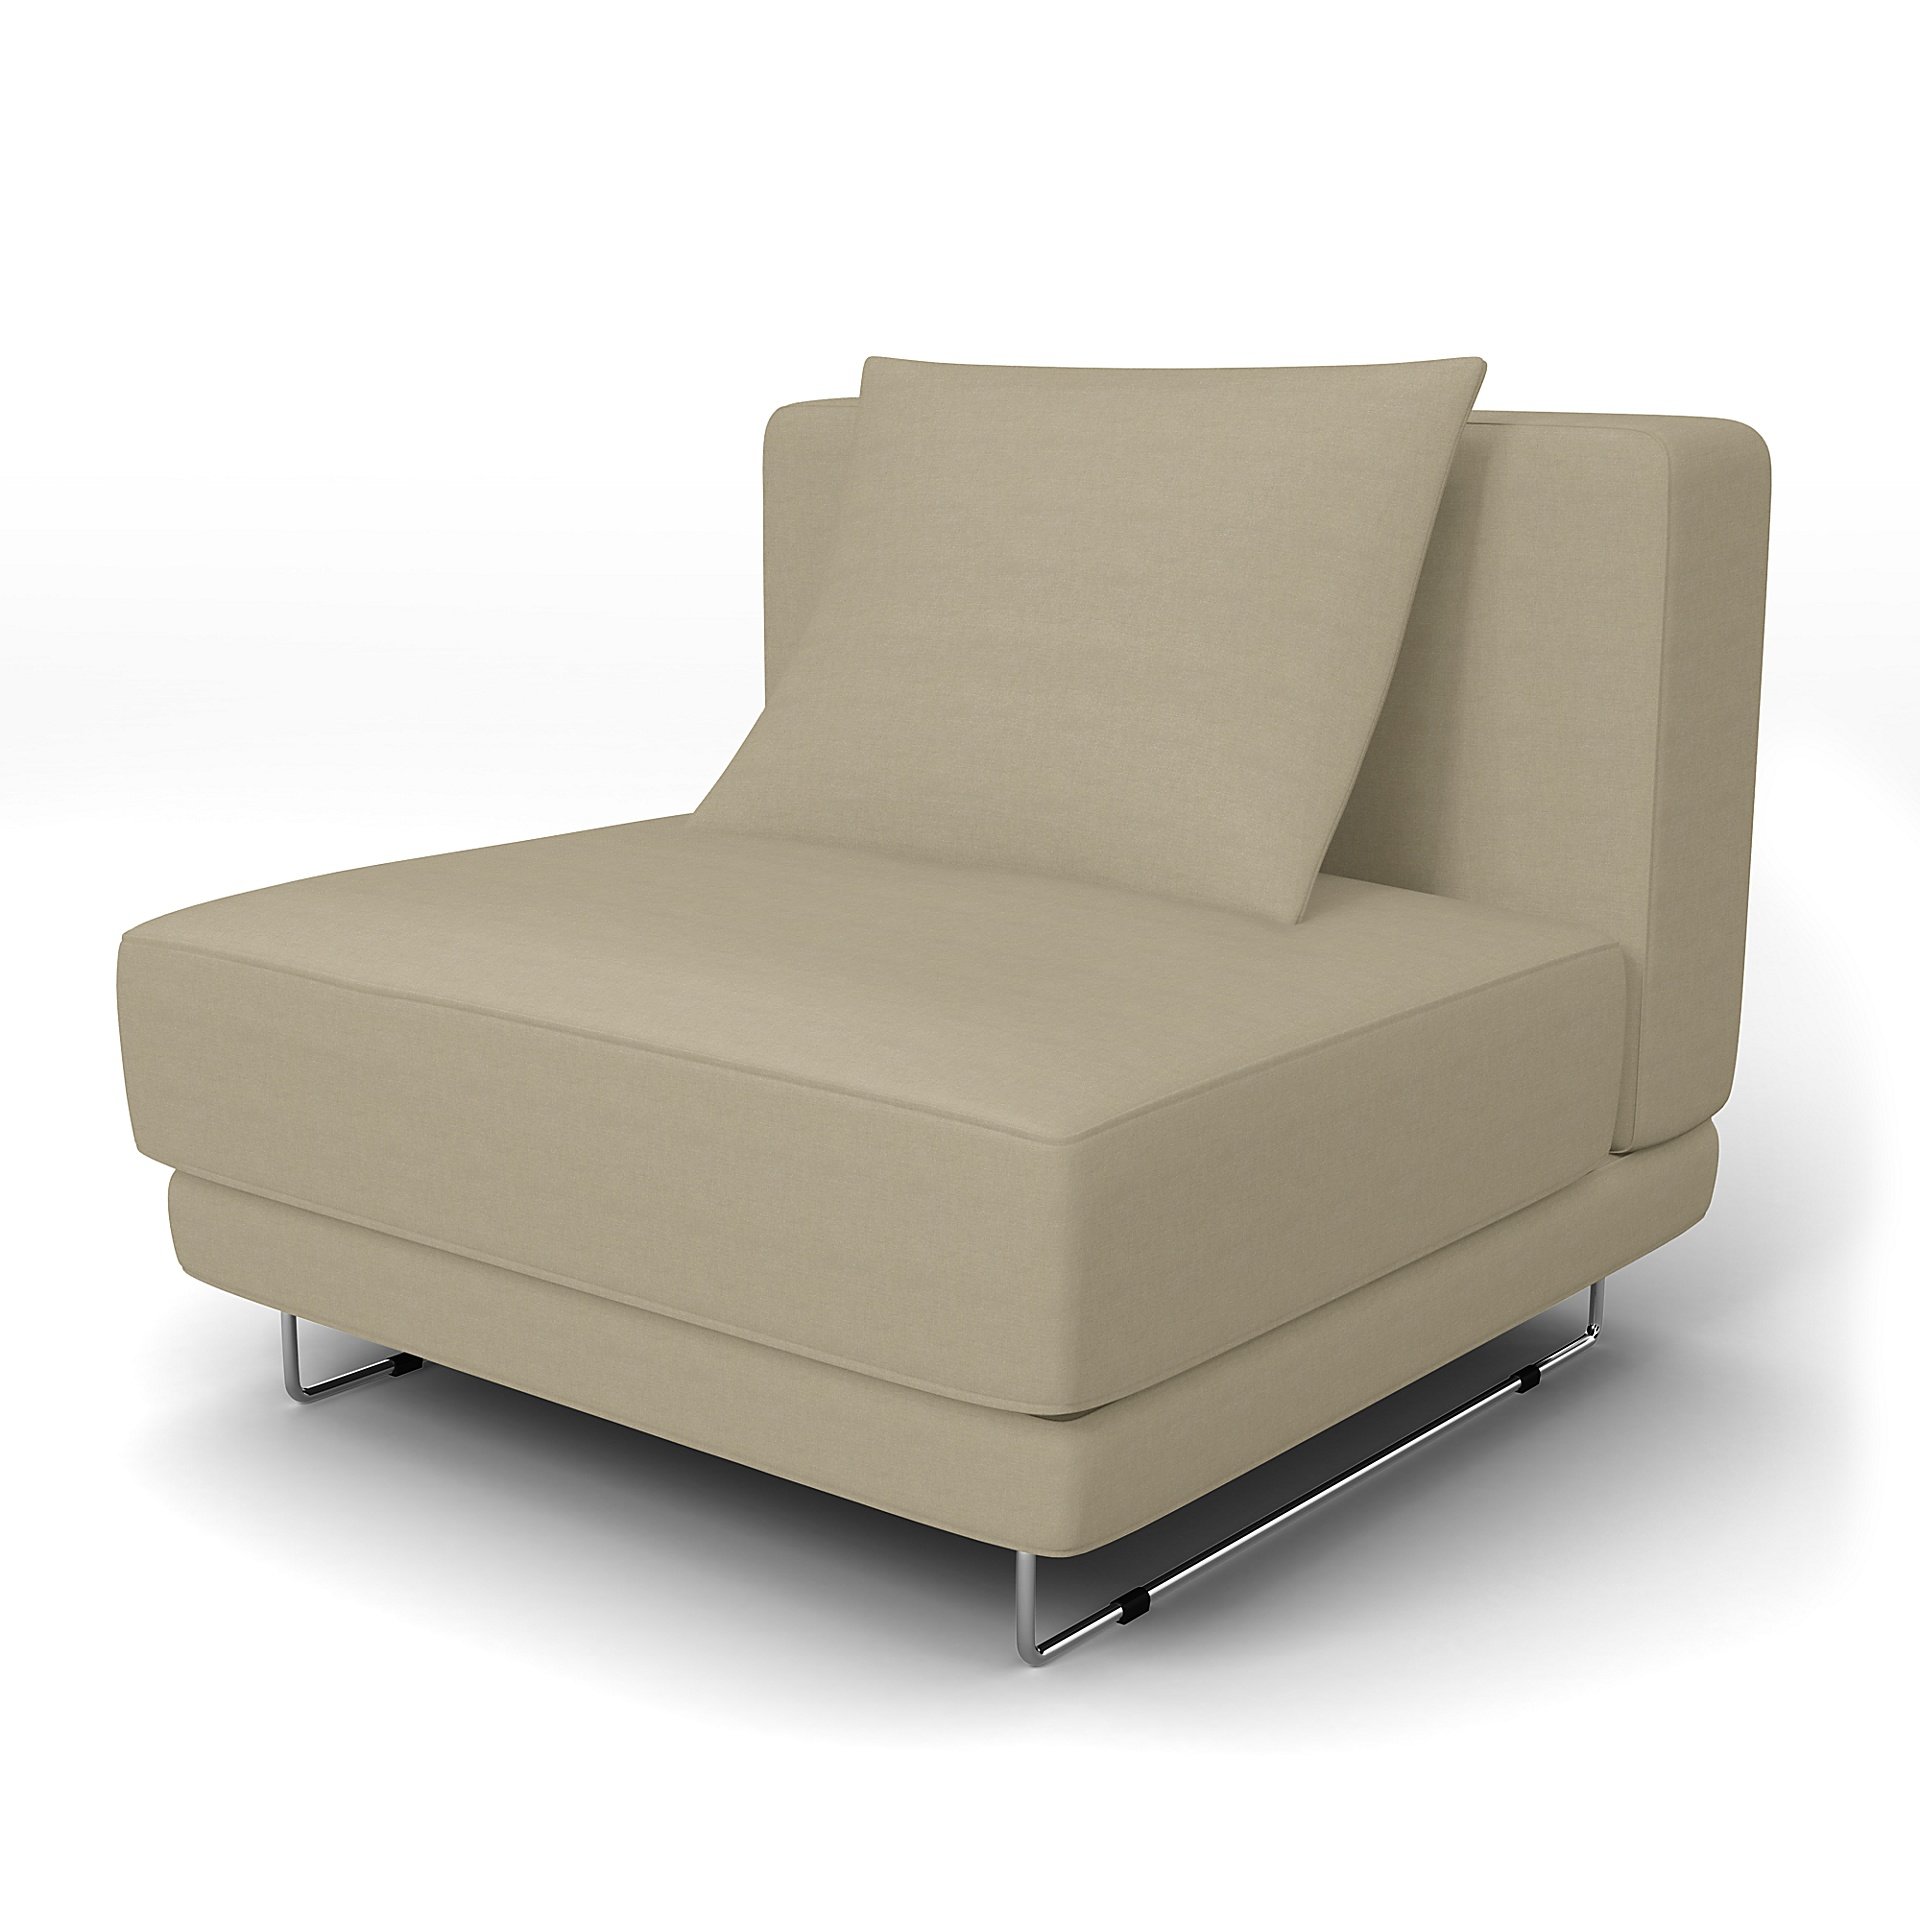 IKEA - Tylosand 1 Seat Module Cover, Tan, Linen - Bemz